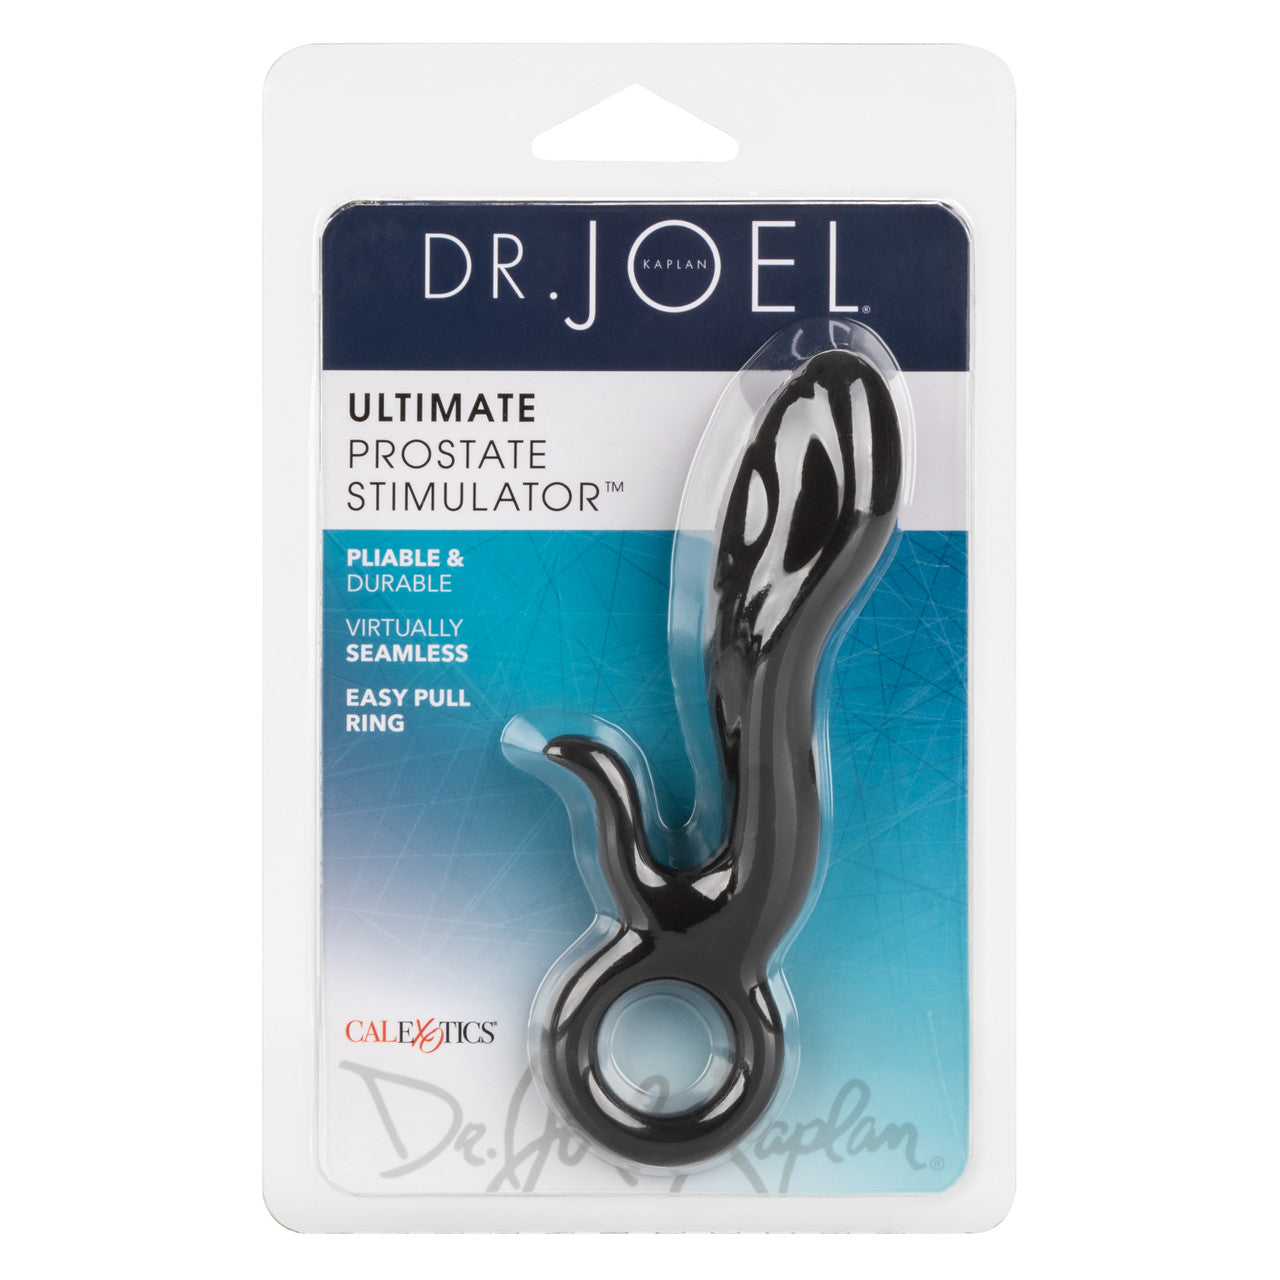 Dr. Joel Kaplan Ultimate Prostate Stimulator - Thorn & Feather